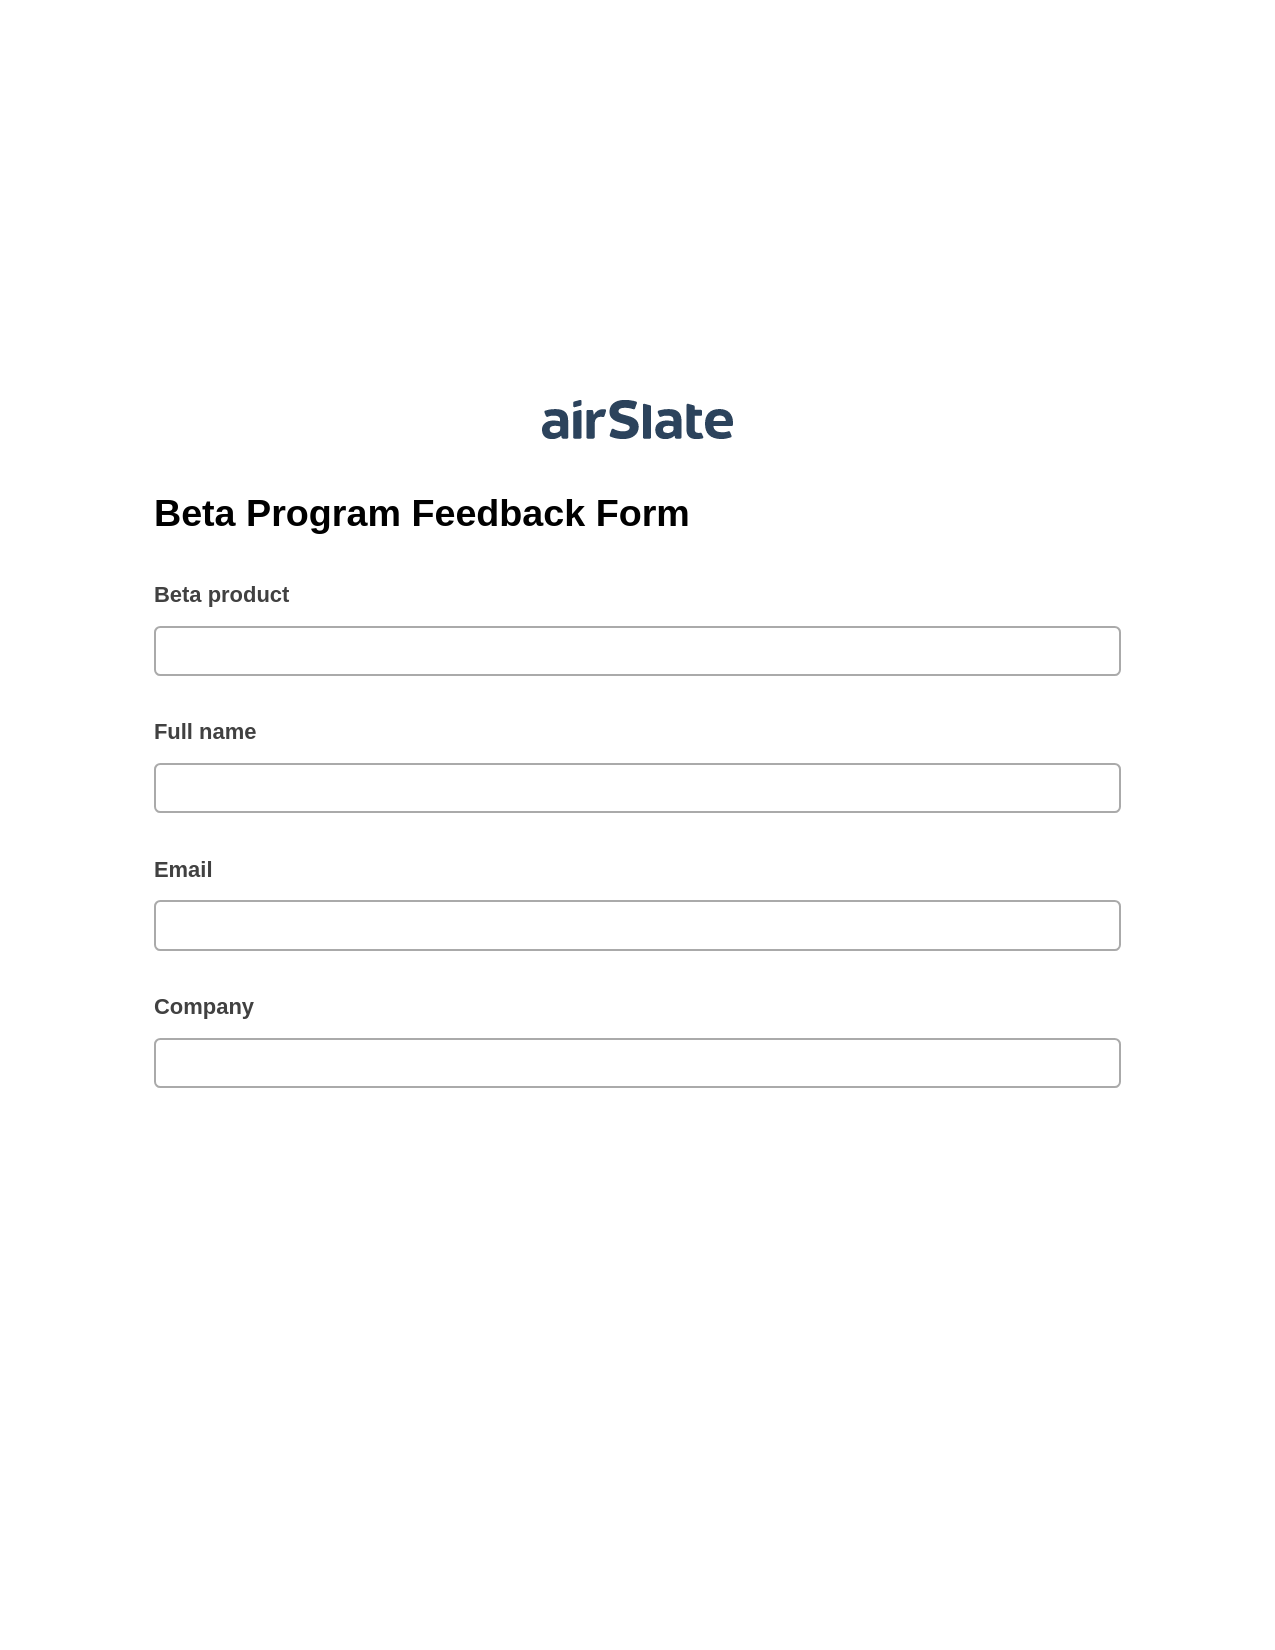 Beta Program Feedback Form Pre-fill Document Bot, Google Calendar Bot, Post-finish Document Bot